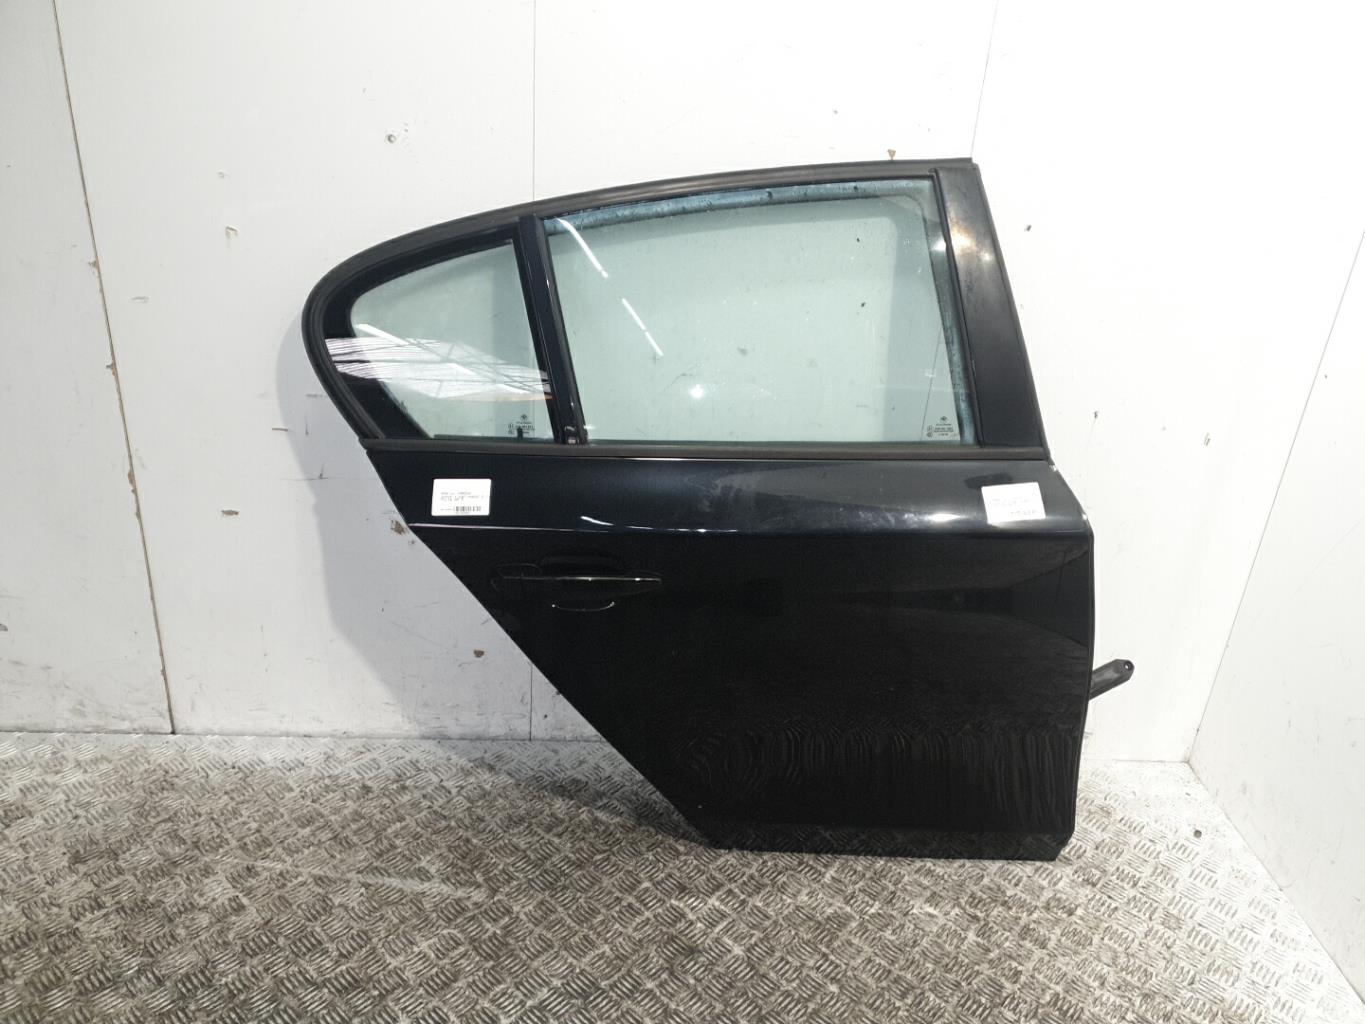 Glace miroir vitre retroviseur avant droit Spilu 10434 pour BMW serie 1 3  E81 E82 E87 E88 E90 E91 E92 F20